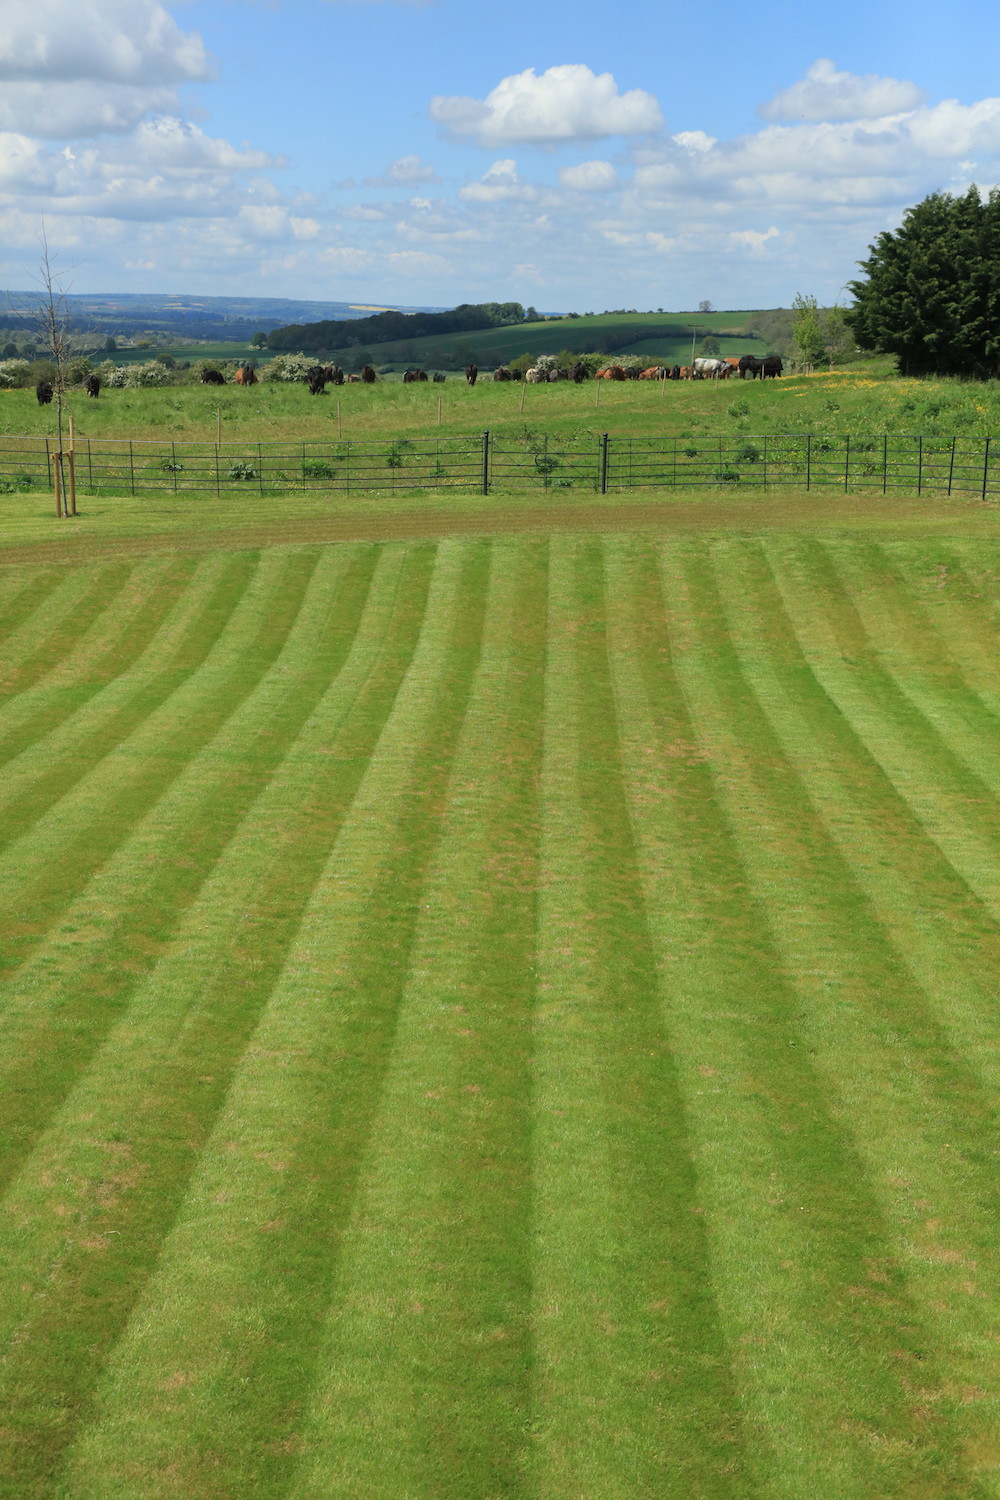 Mown lawn stripes at Sibford Park